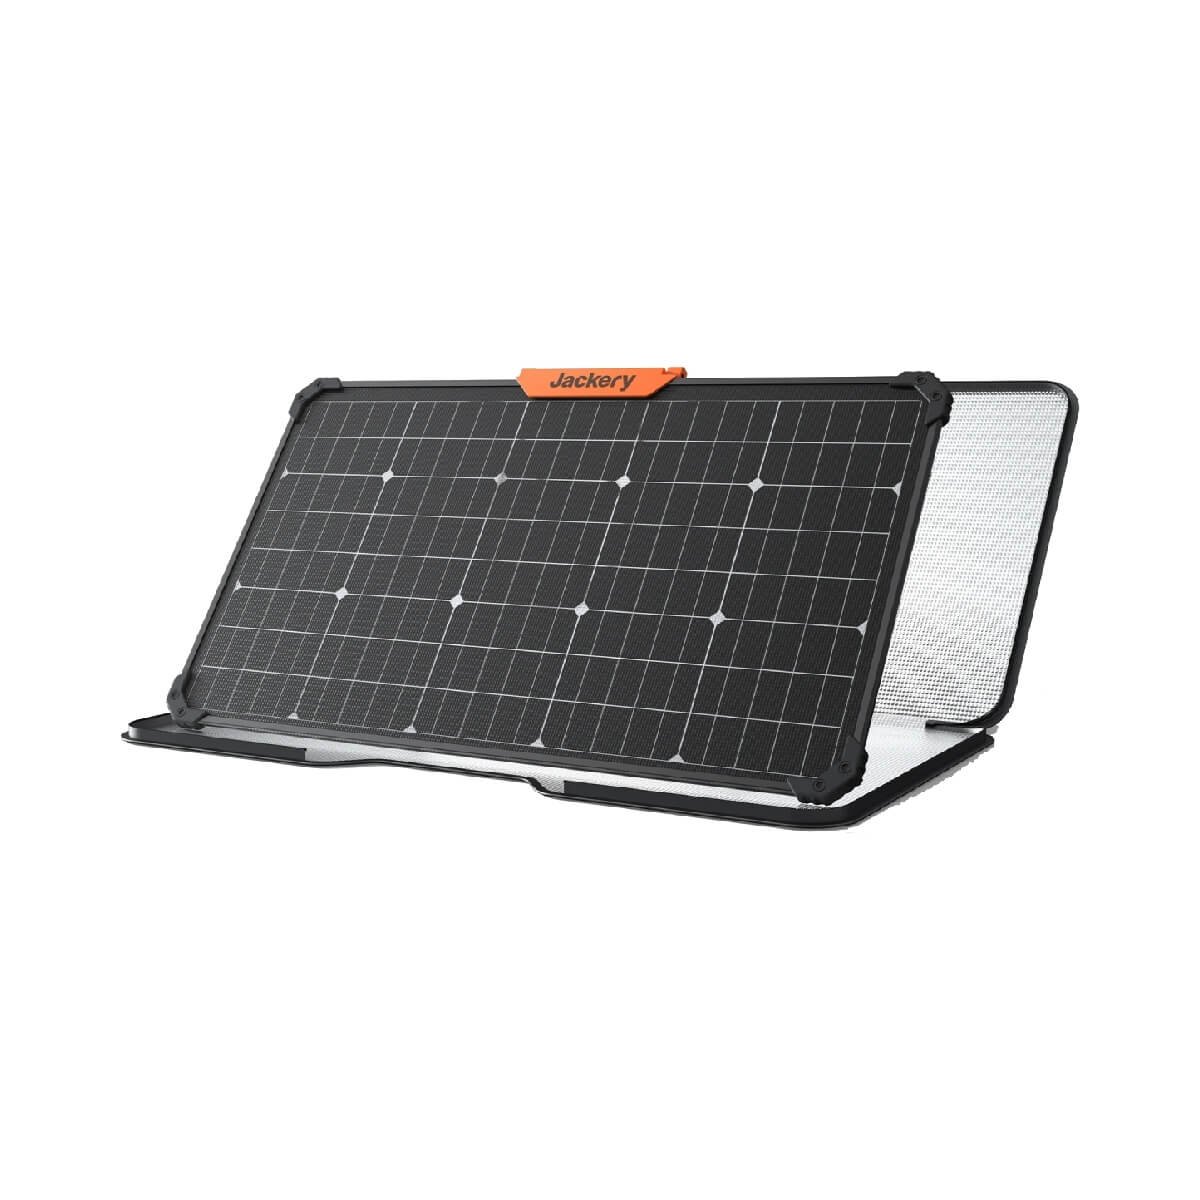 Jackery Solar Panel 80W - SolarSaga Portable Solar Panel